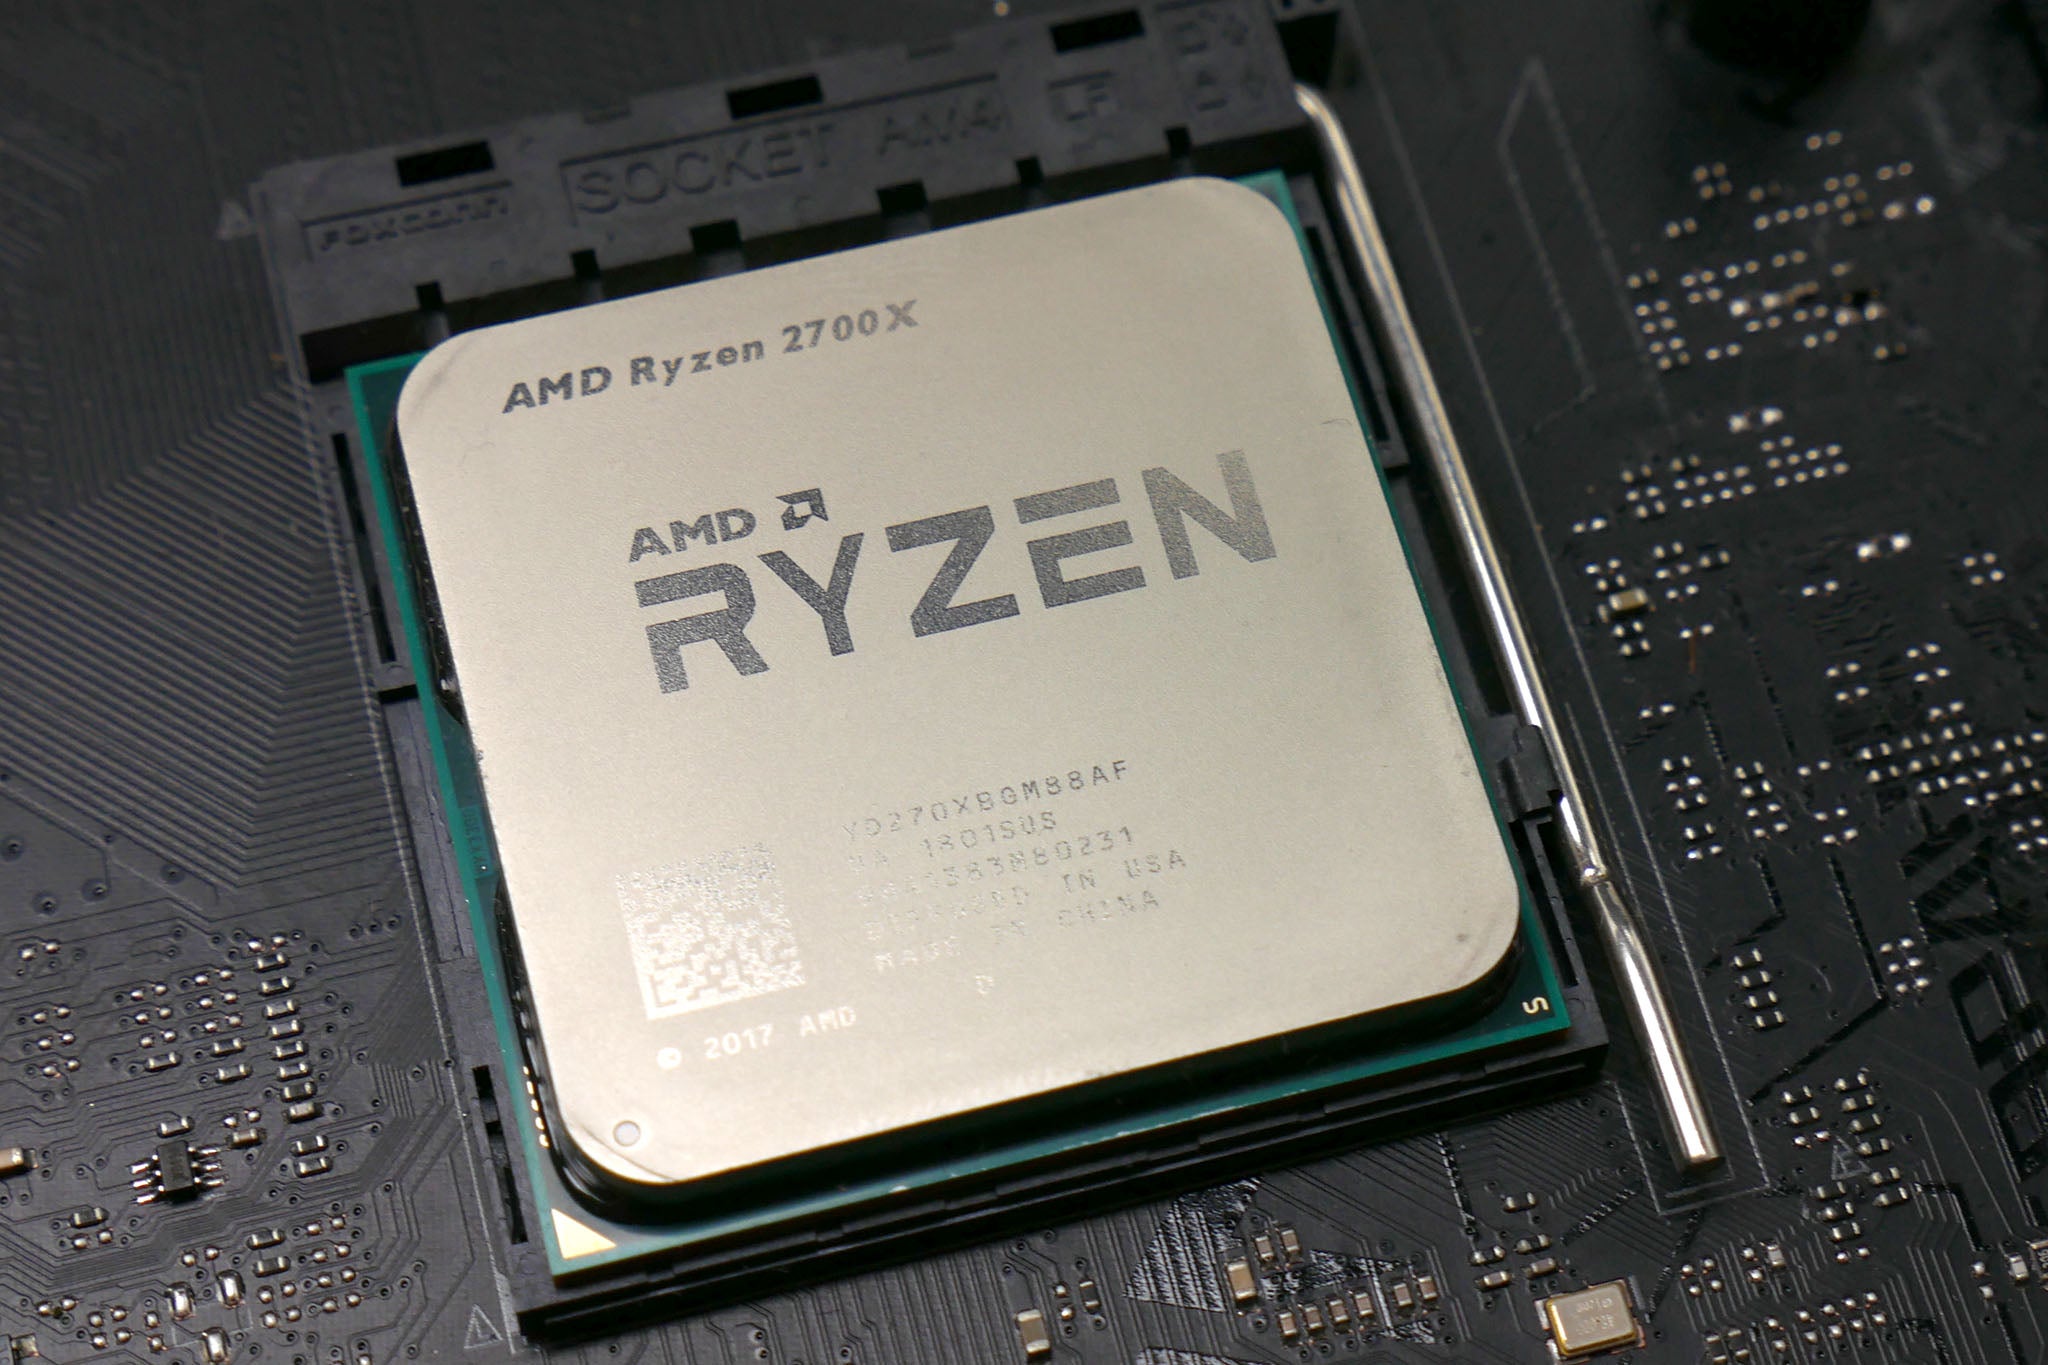 Kleren merk balkon Ryzen 7 2700X Review: A worthy rival to Intel's 8th gen CPUs